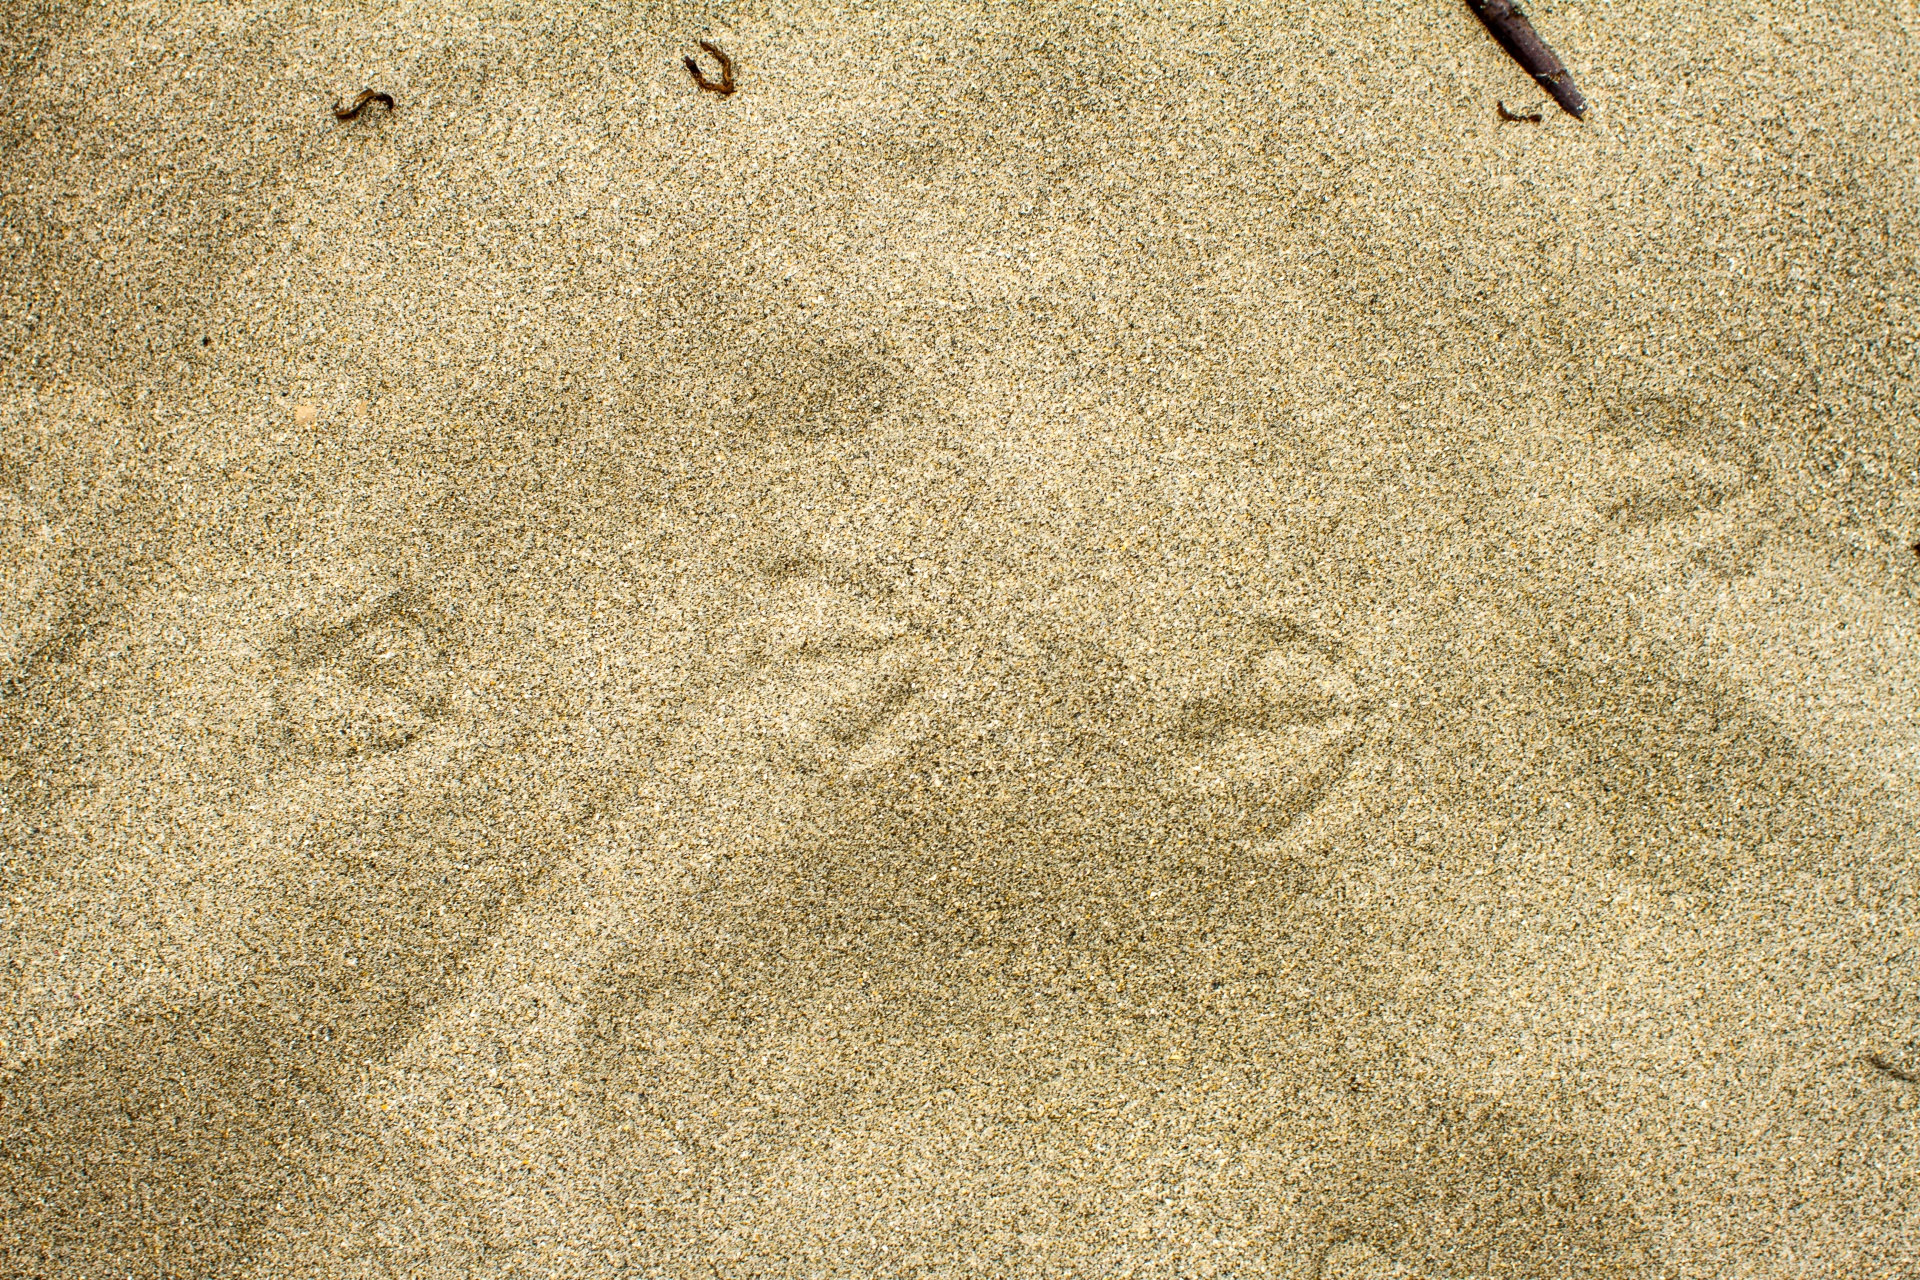 seagull footprints sand free photo